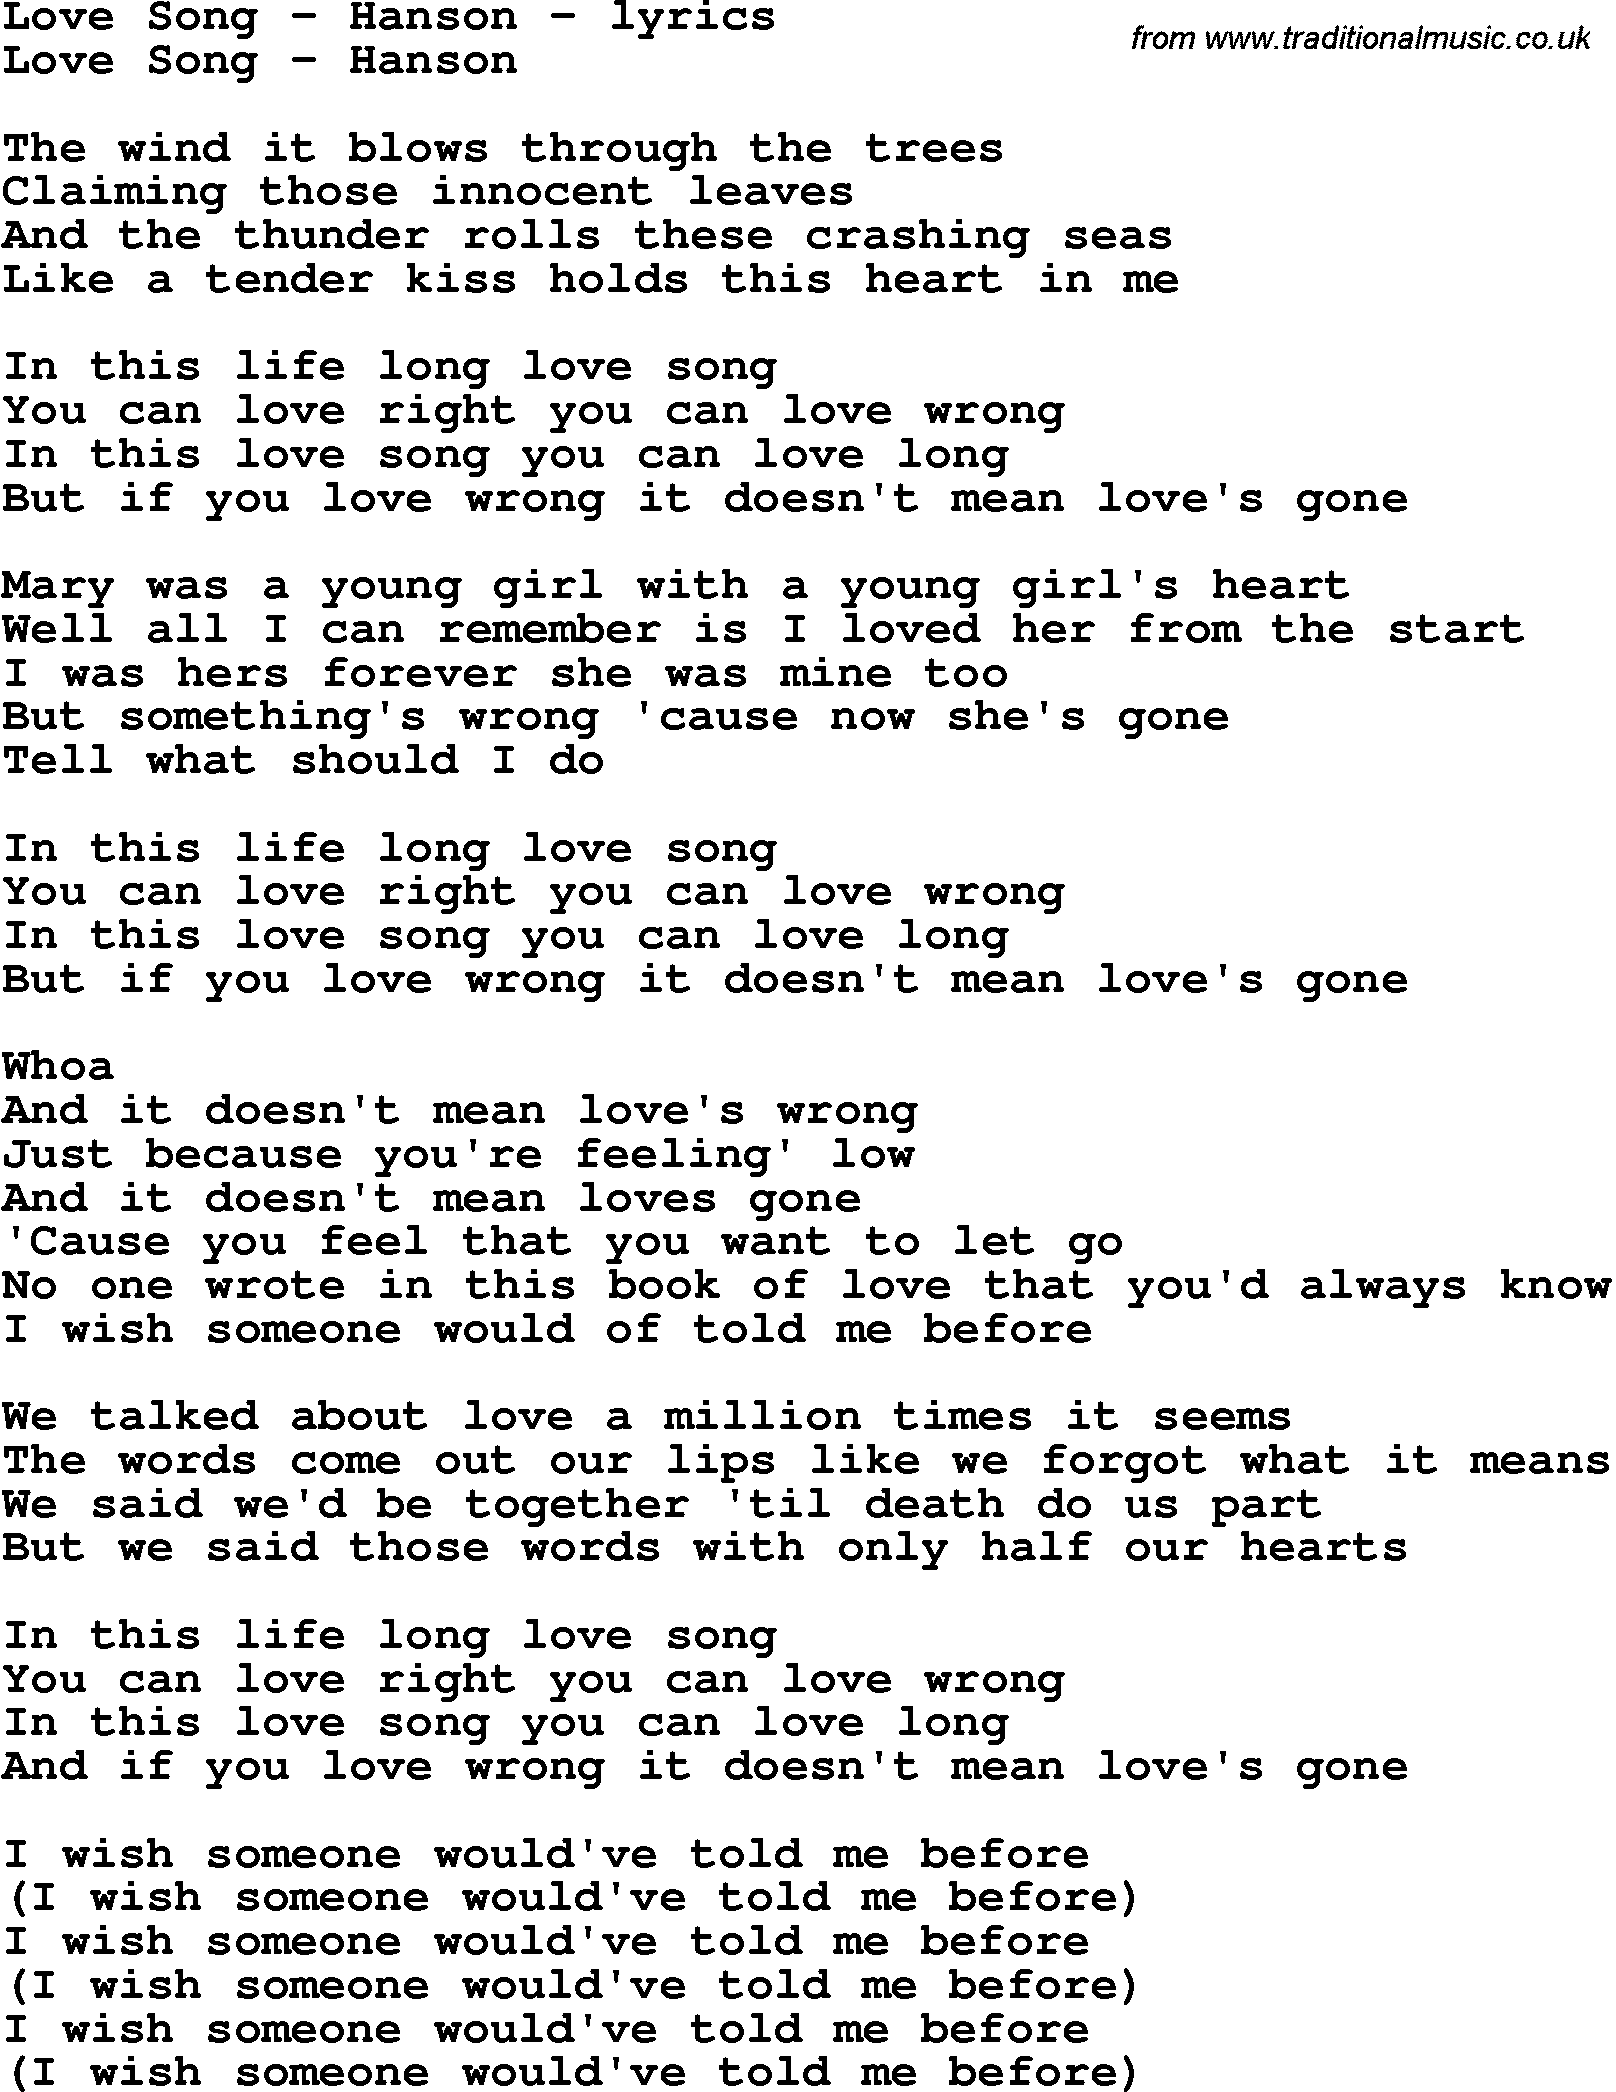 Love Song Lyrics for: Love Song - Hanson